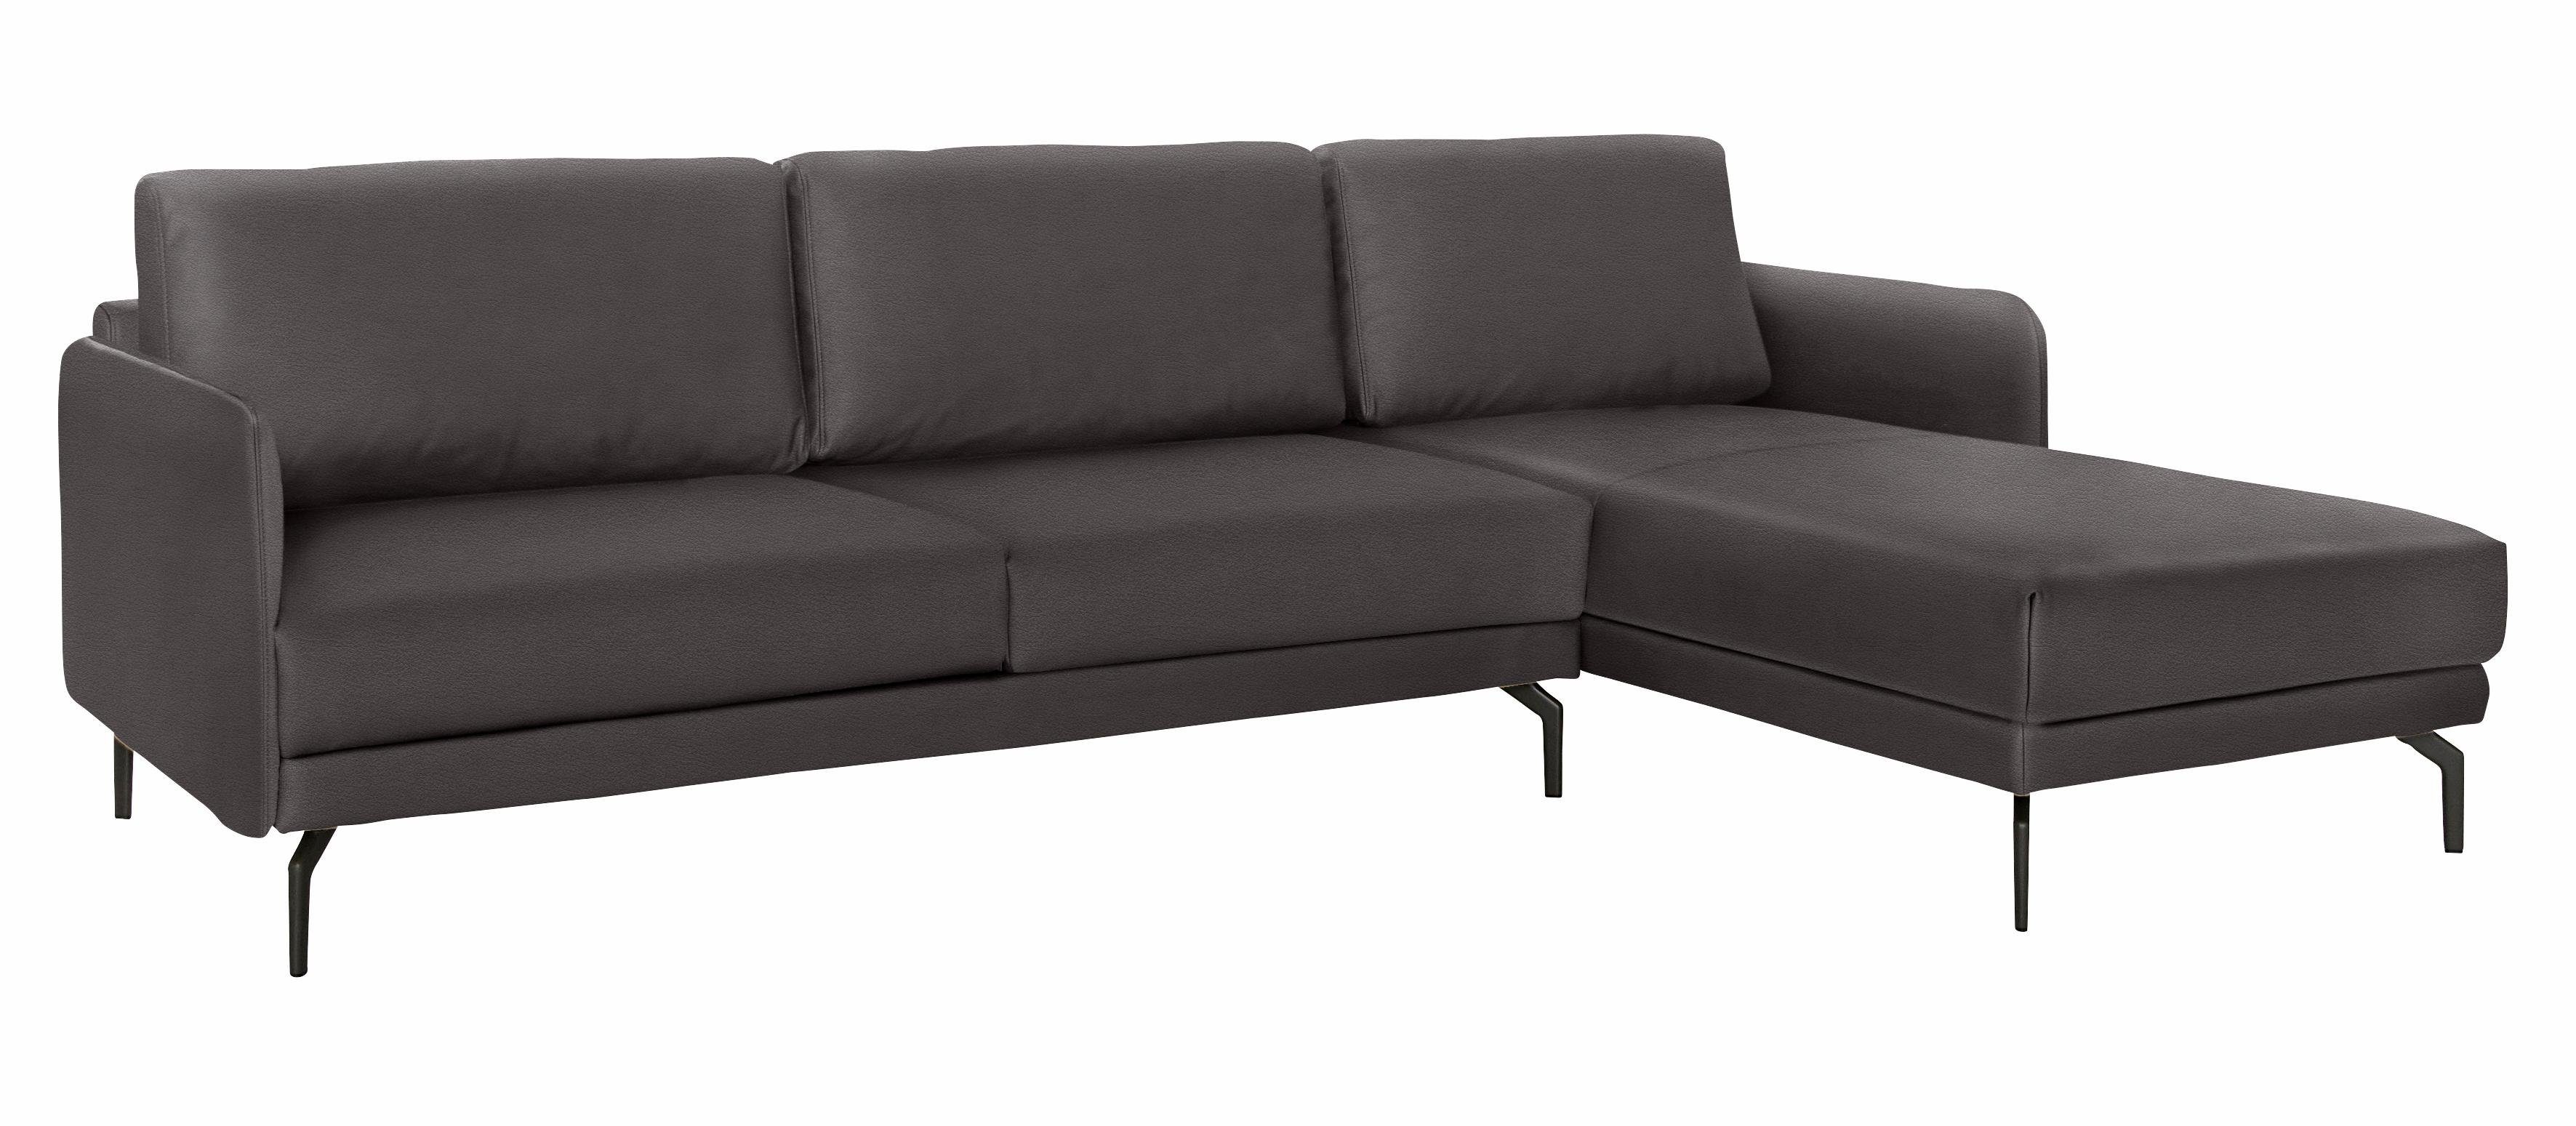 hülsta sofa Ecksofa hs.450, Armlehne 274 Breite sehr schmal, Umbragrau Alugussfuß cm